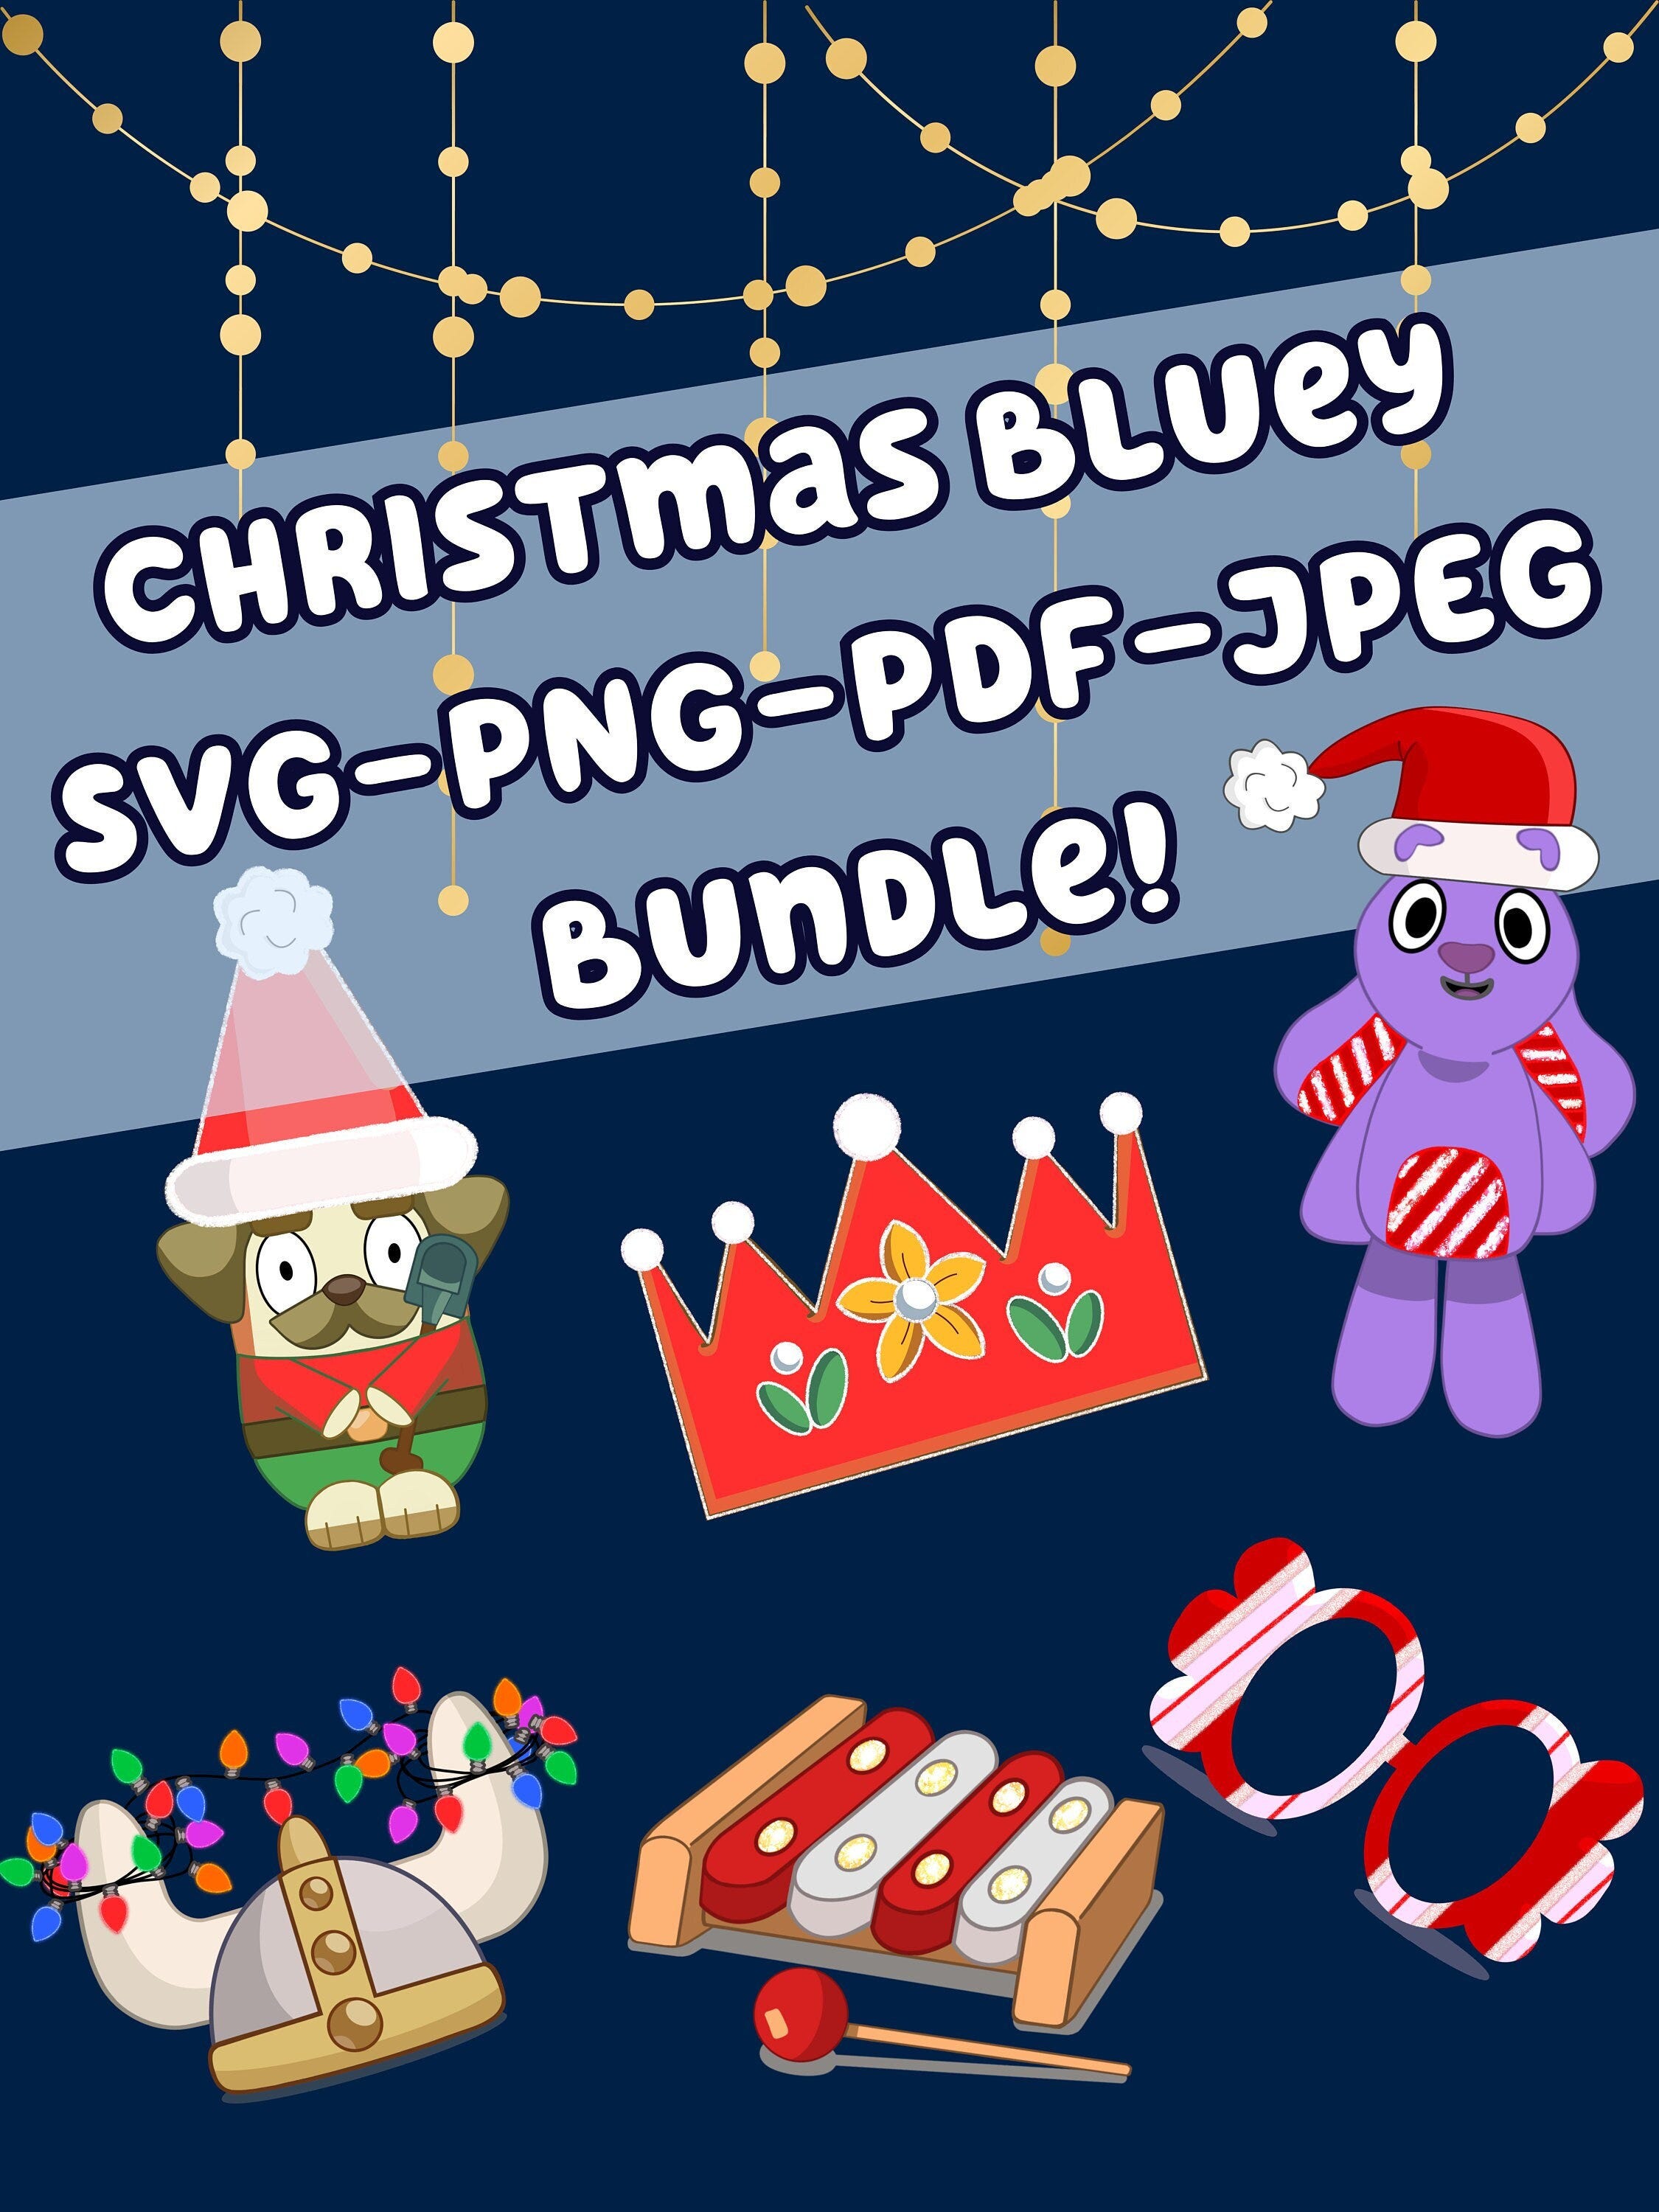 Christmas Bluey SVG PNG PDF Jpeg Bundle- Bluey Font Svg Cricut- Creative Personalized Gifts for Kids- Teacher, Coworker, Boyfriend, Friends